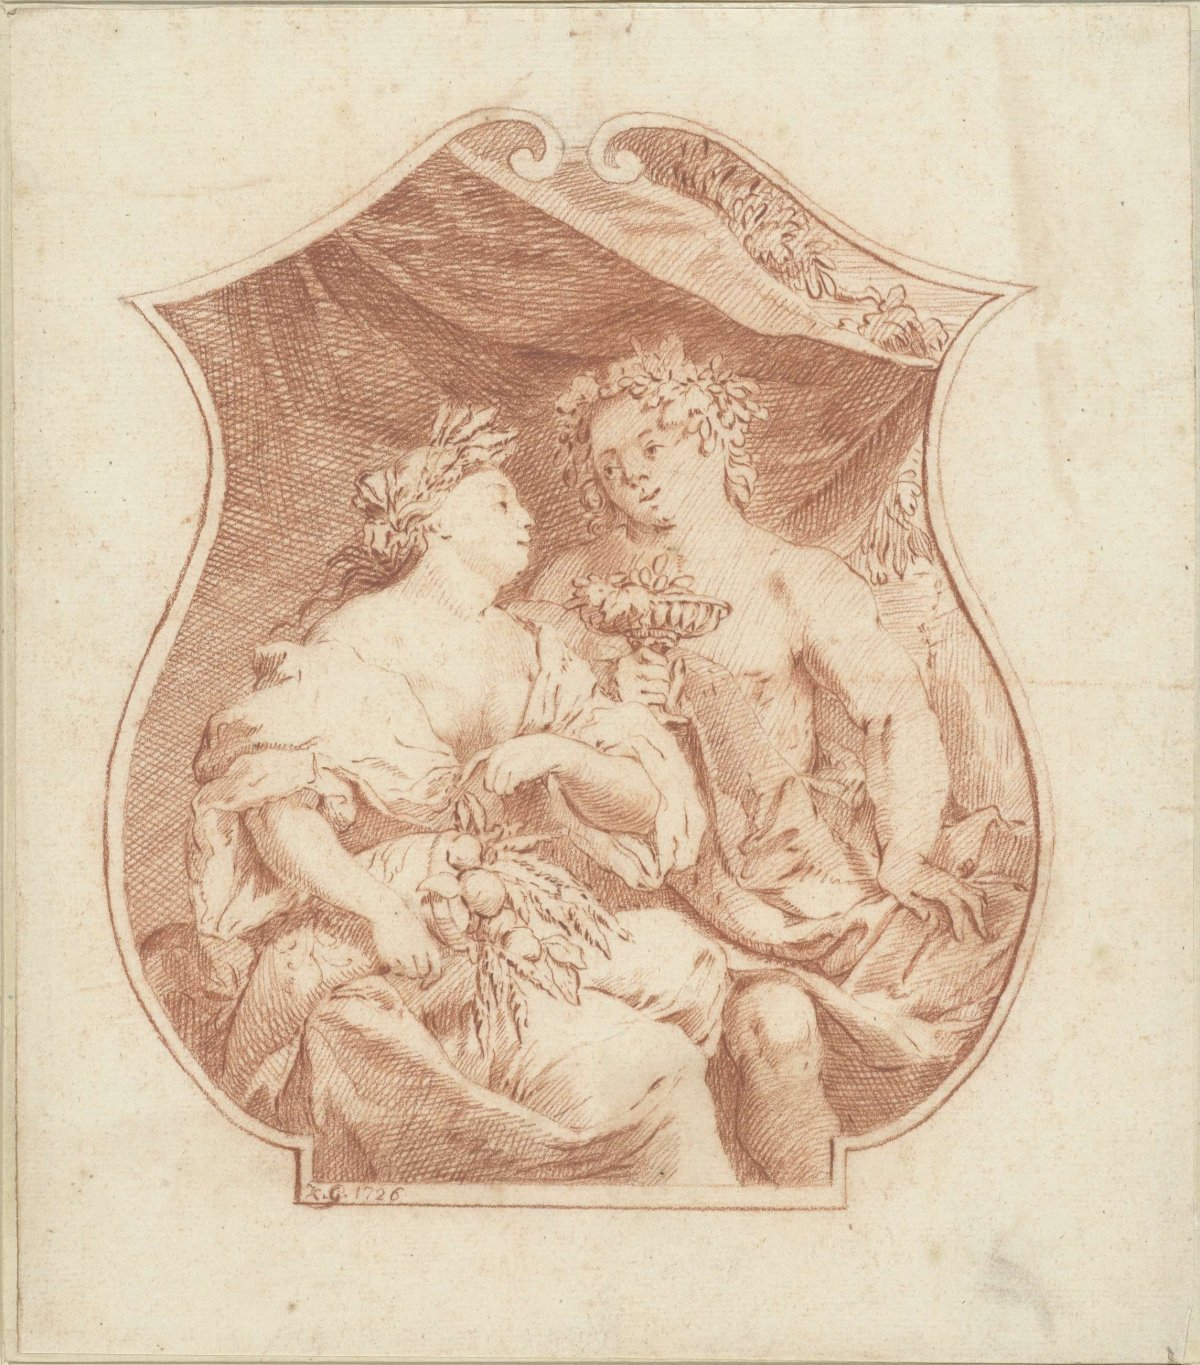 Bacchus and Ceres, Monogrammist KG, 1726